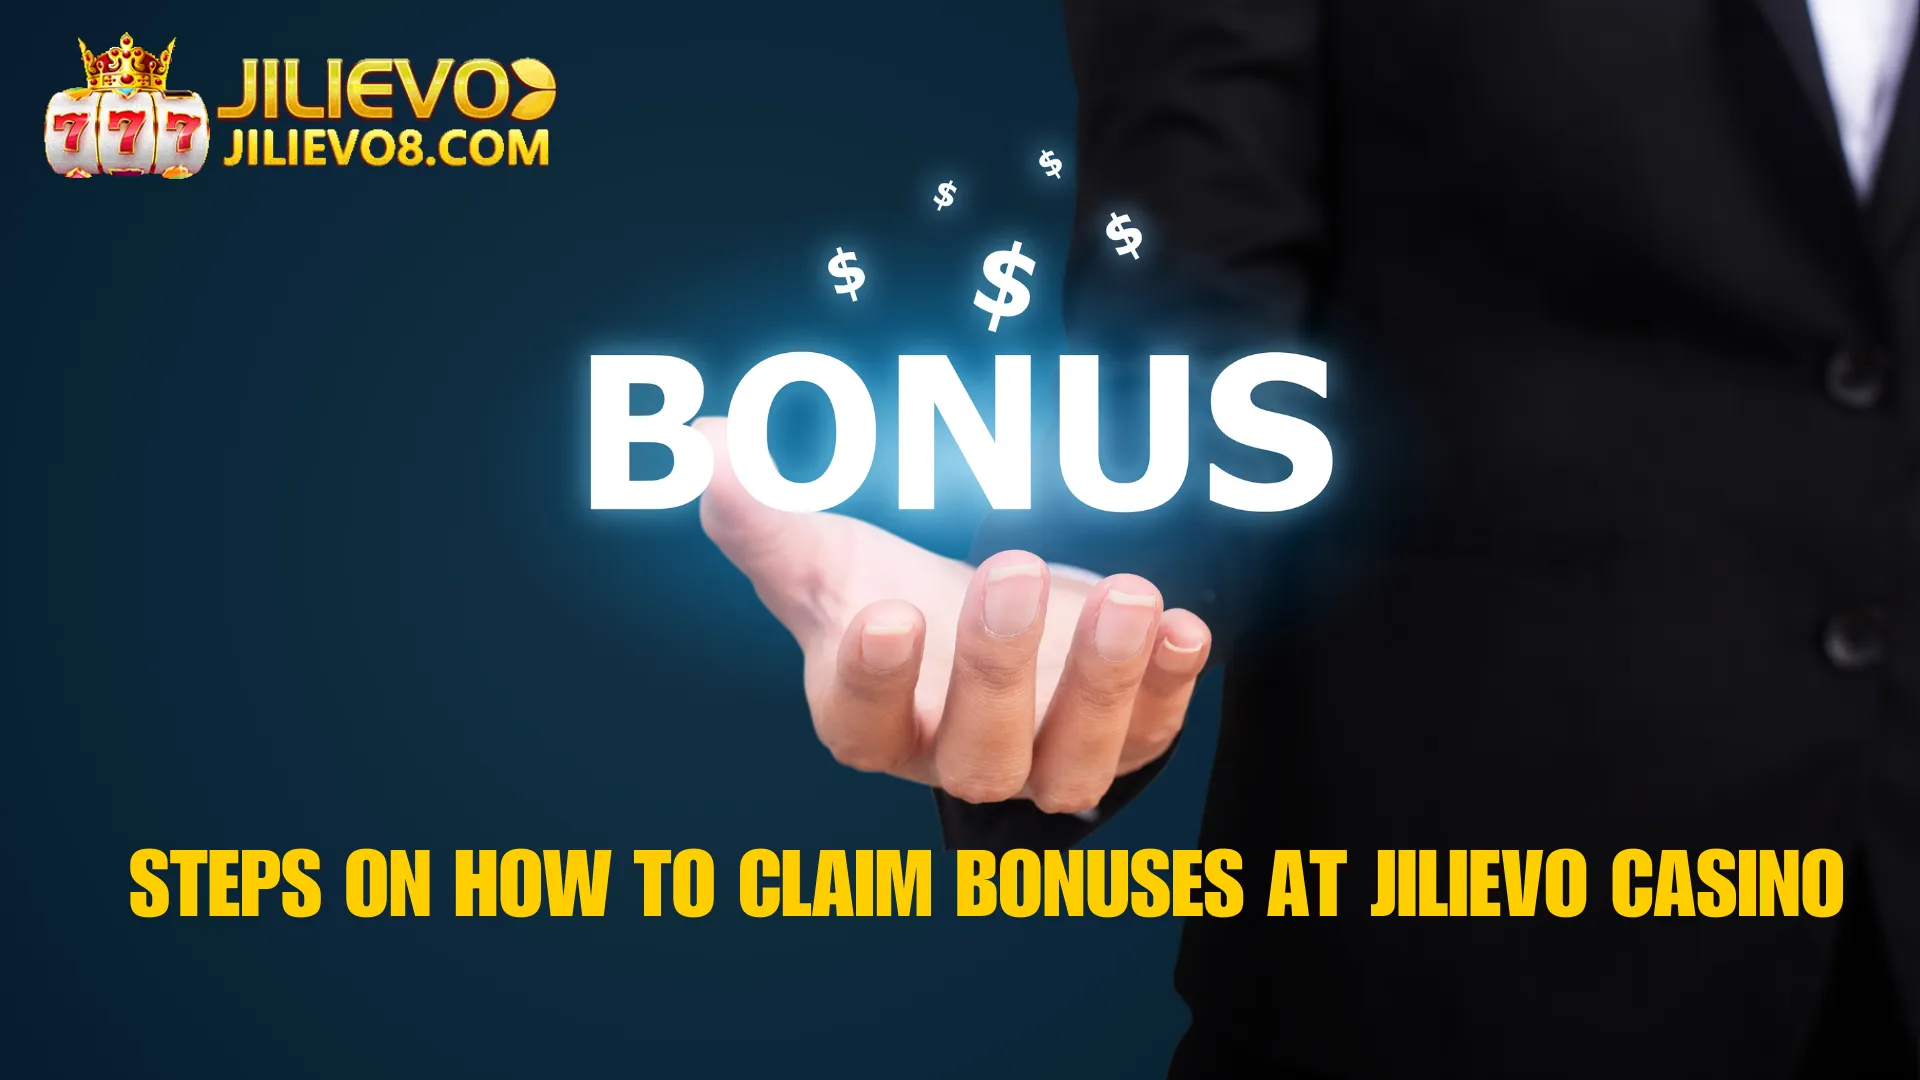 How to Claim Bonuses at Jilievo Casino